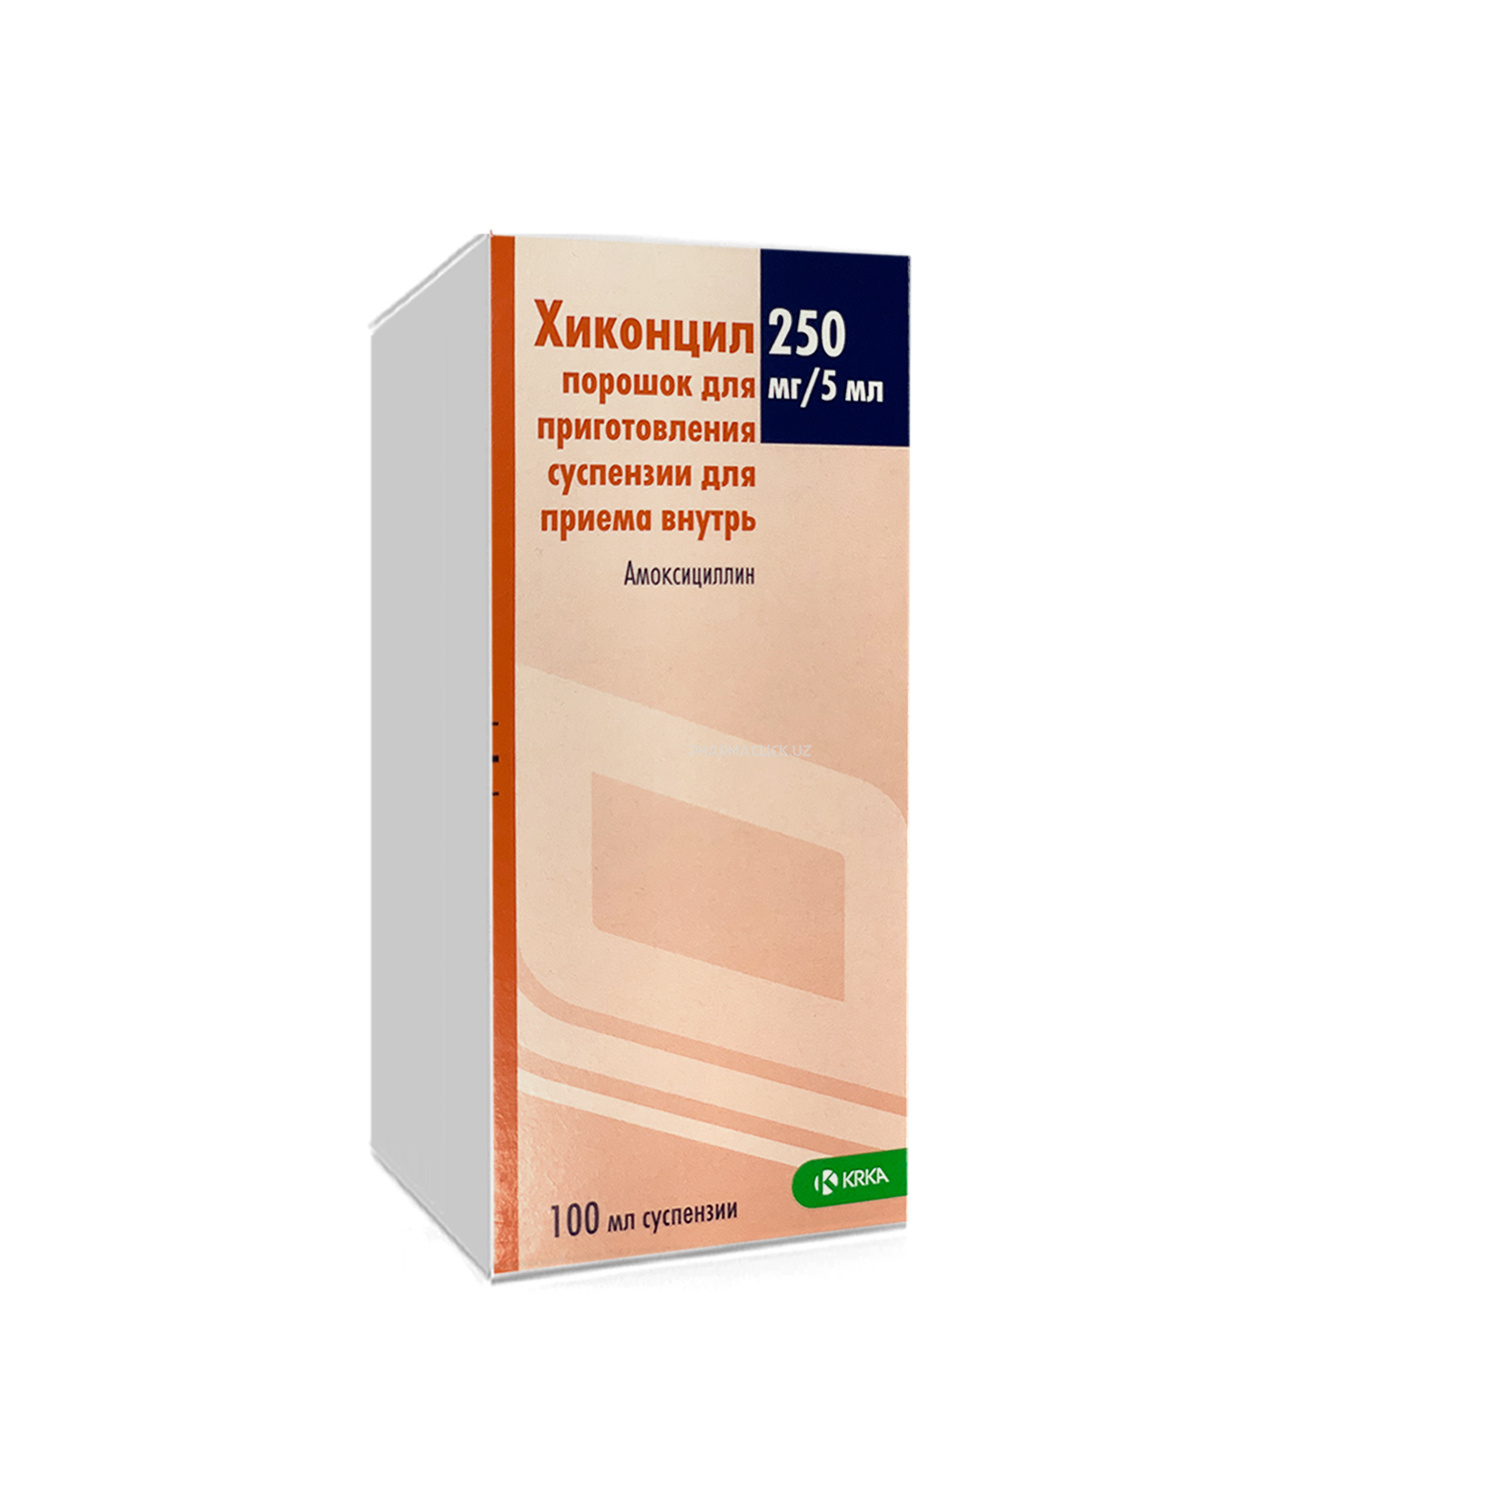 Xikontsil 250 mg/5 ml 100 ml №1